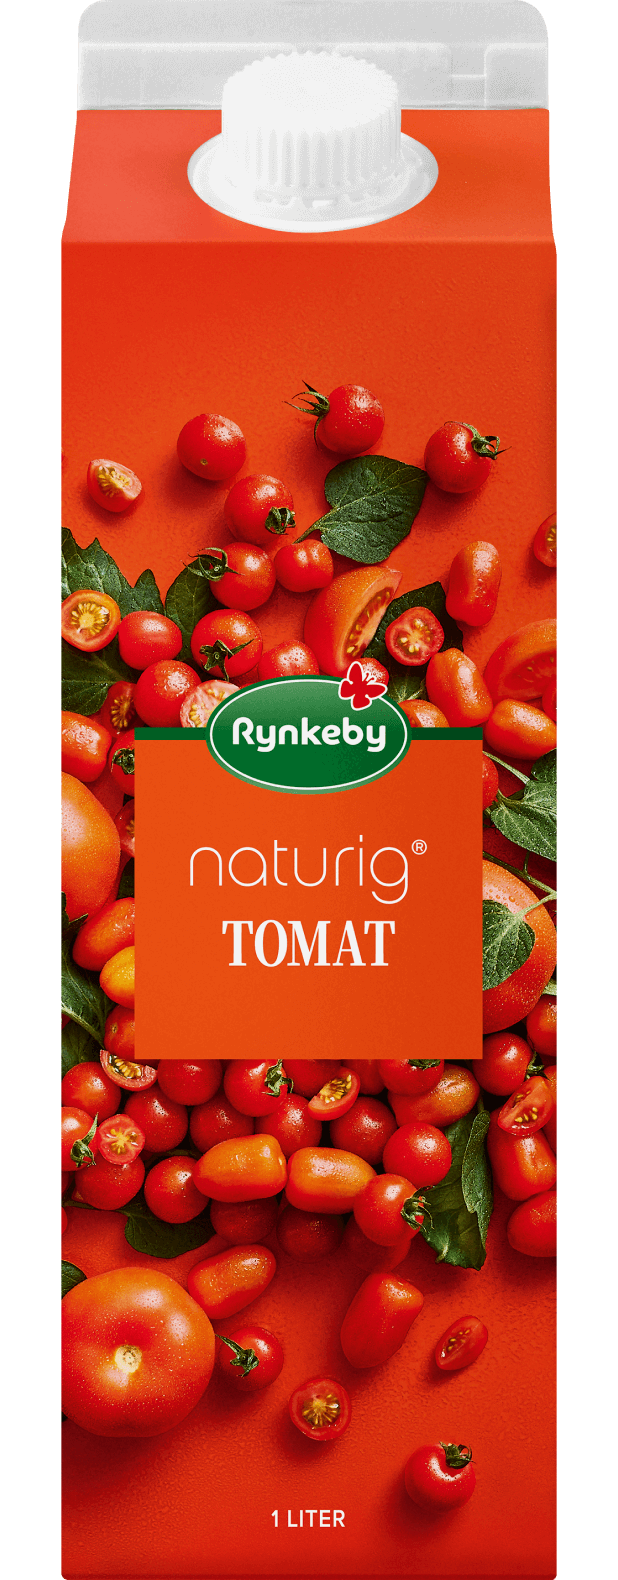 Naturig Tomat